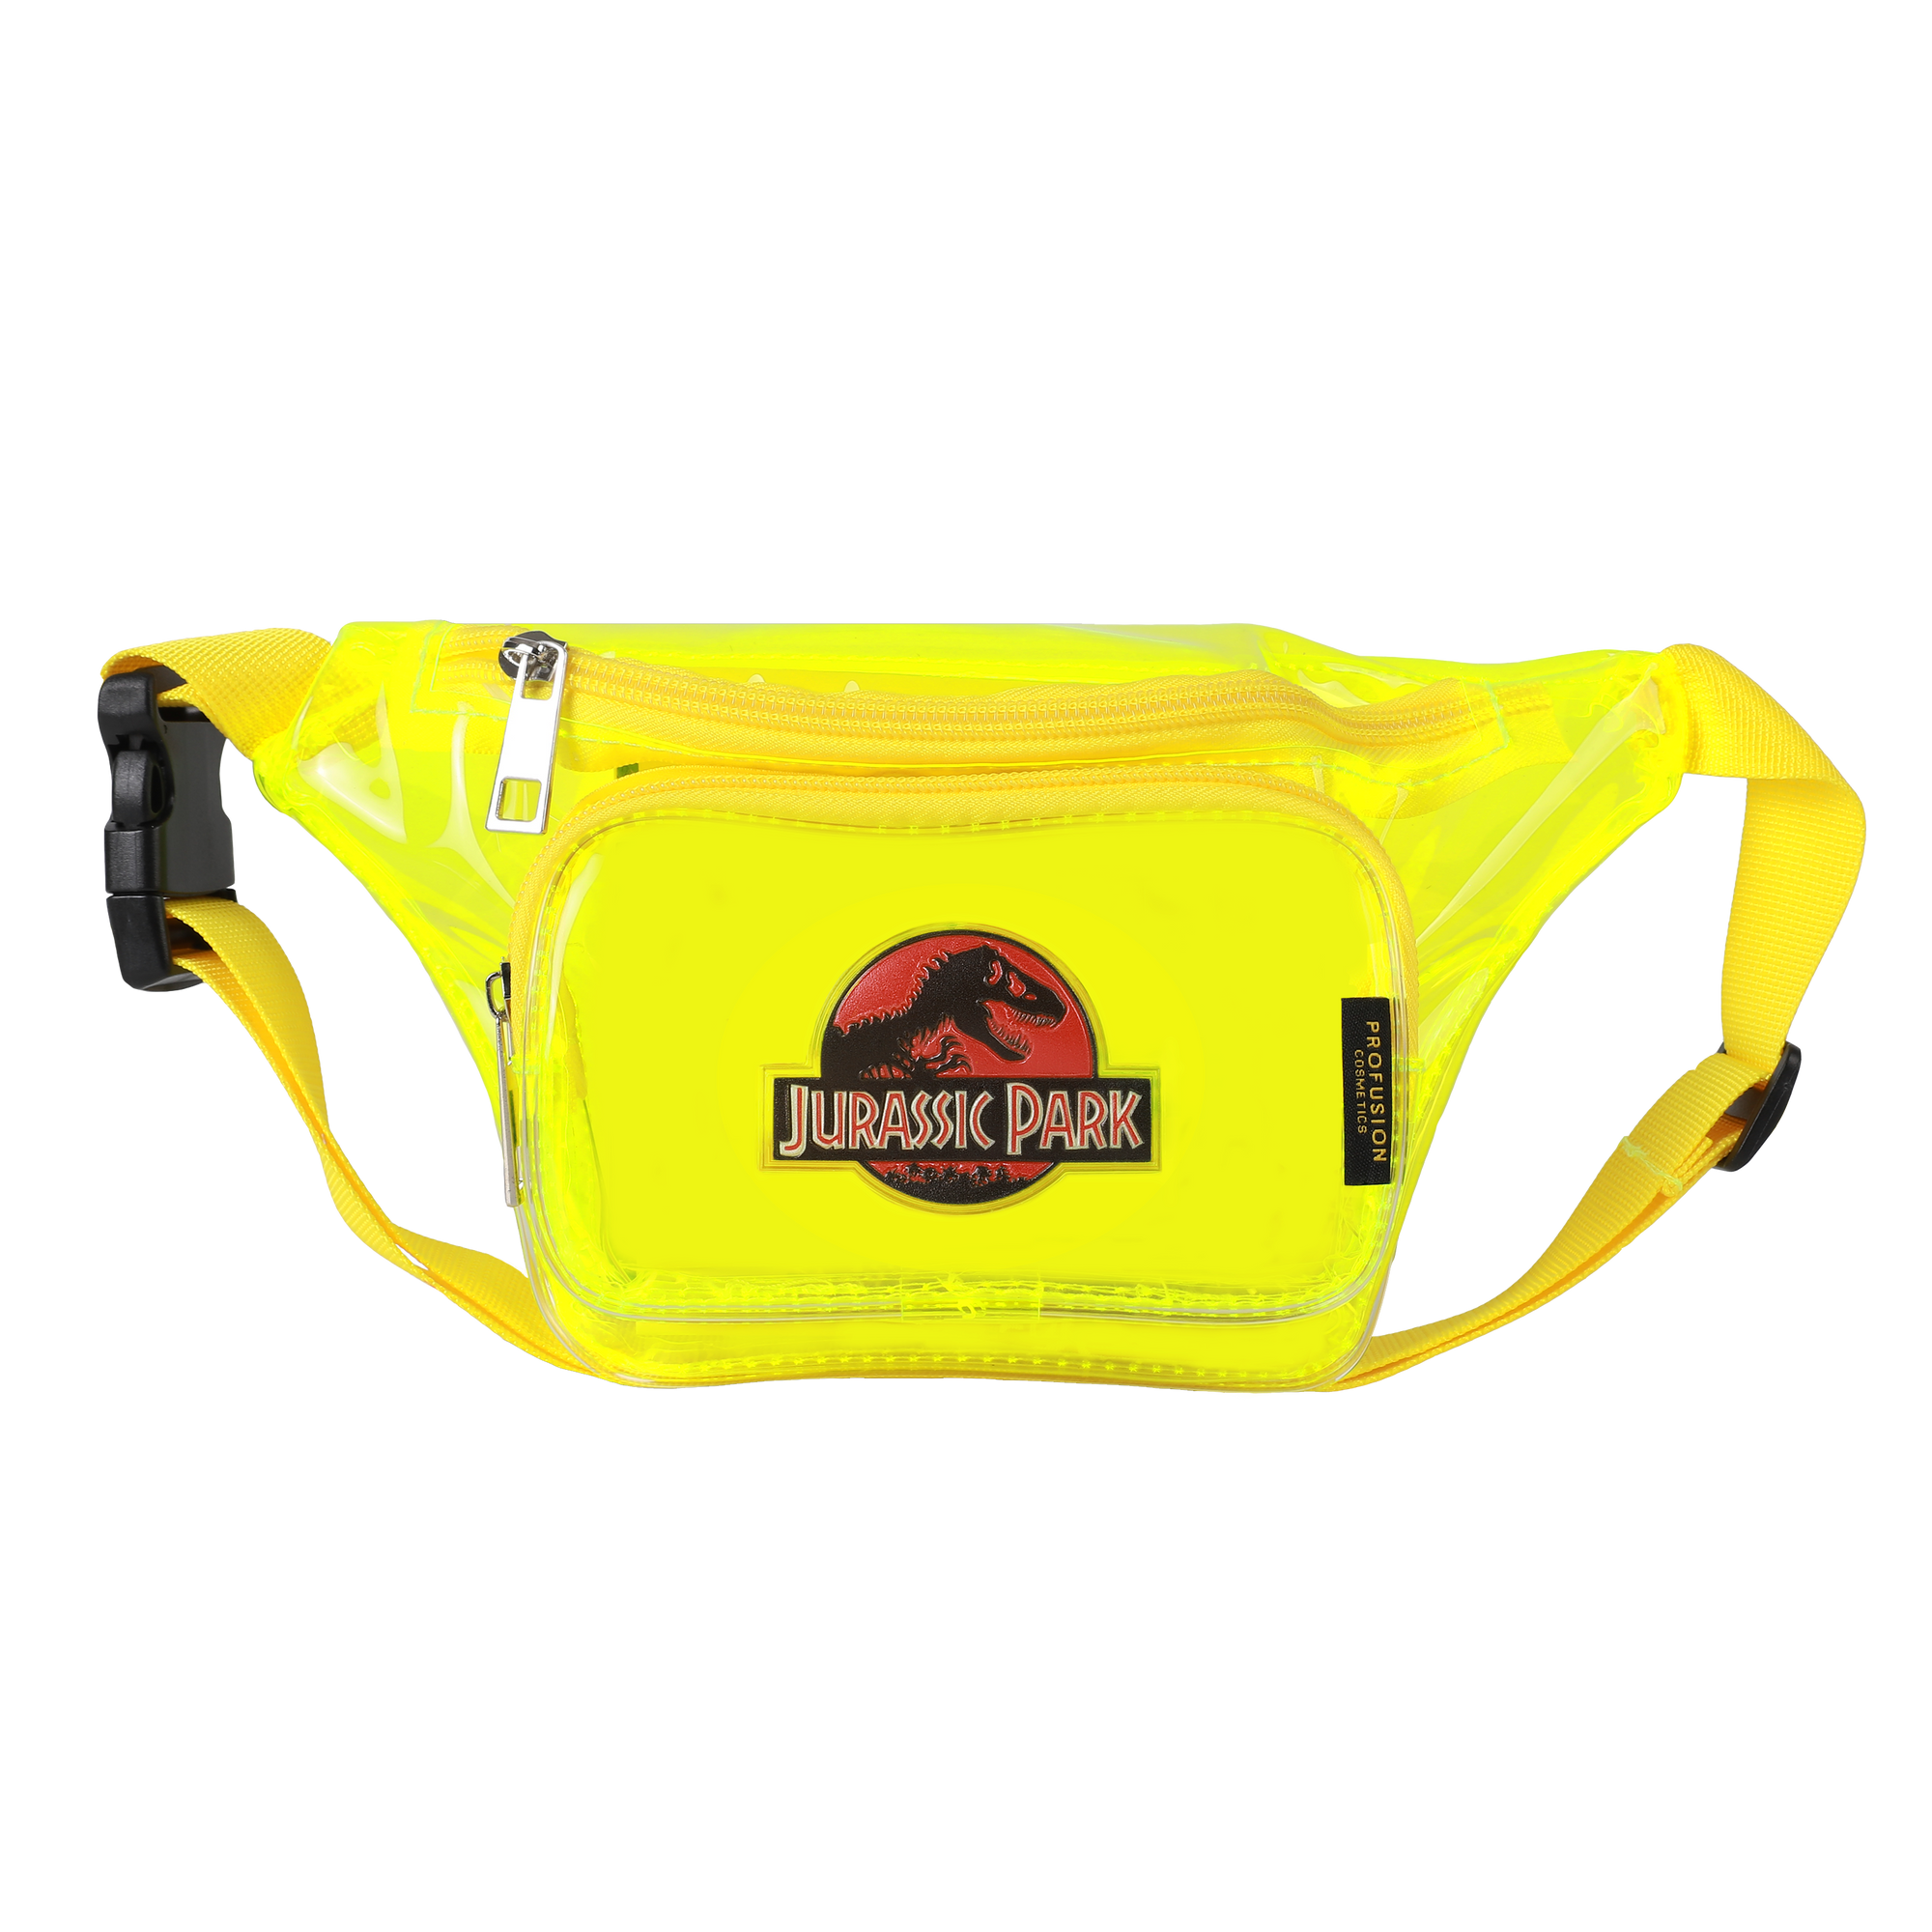 Jurassic Park Mini Duffle Crossbody Bag | Official Apparel & Accessories |  Dumbgood™ | Crossbody bag, Bags, Jurassic park